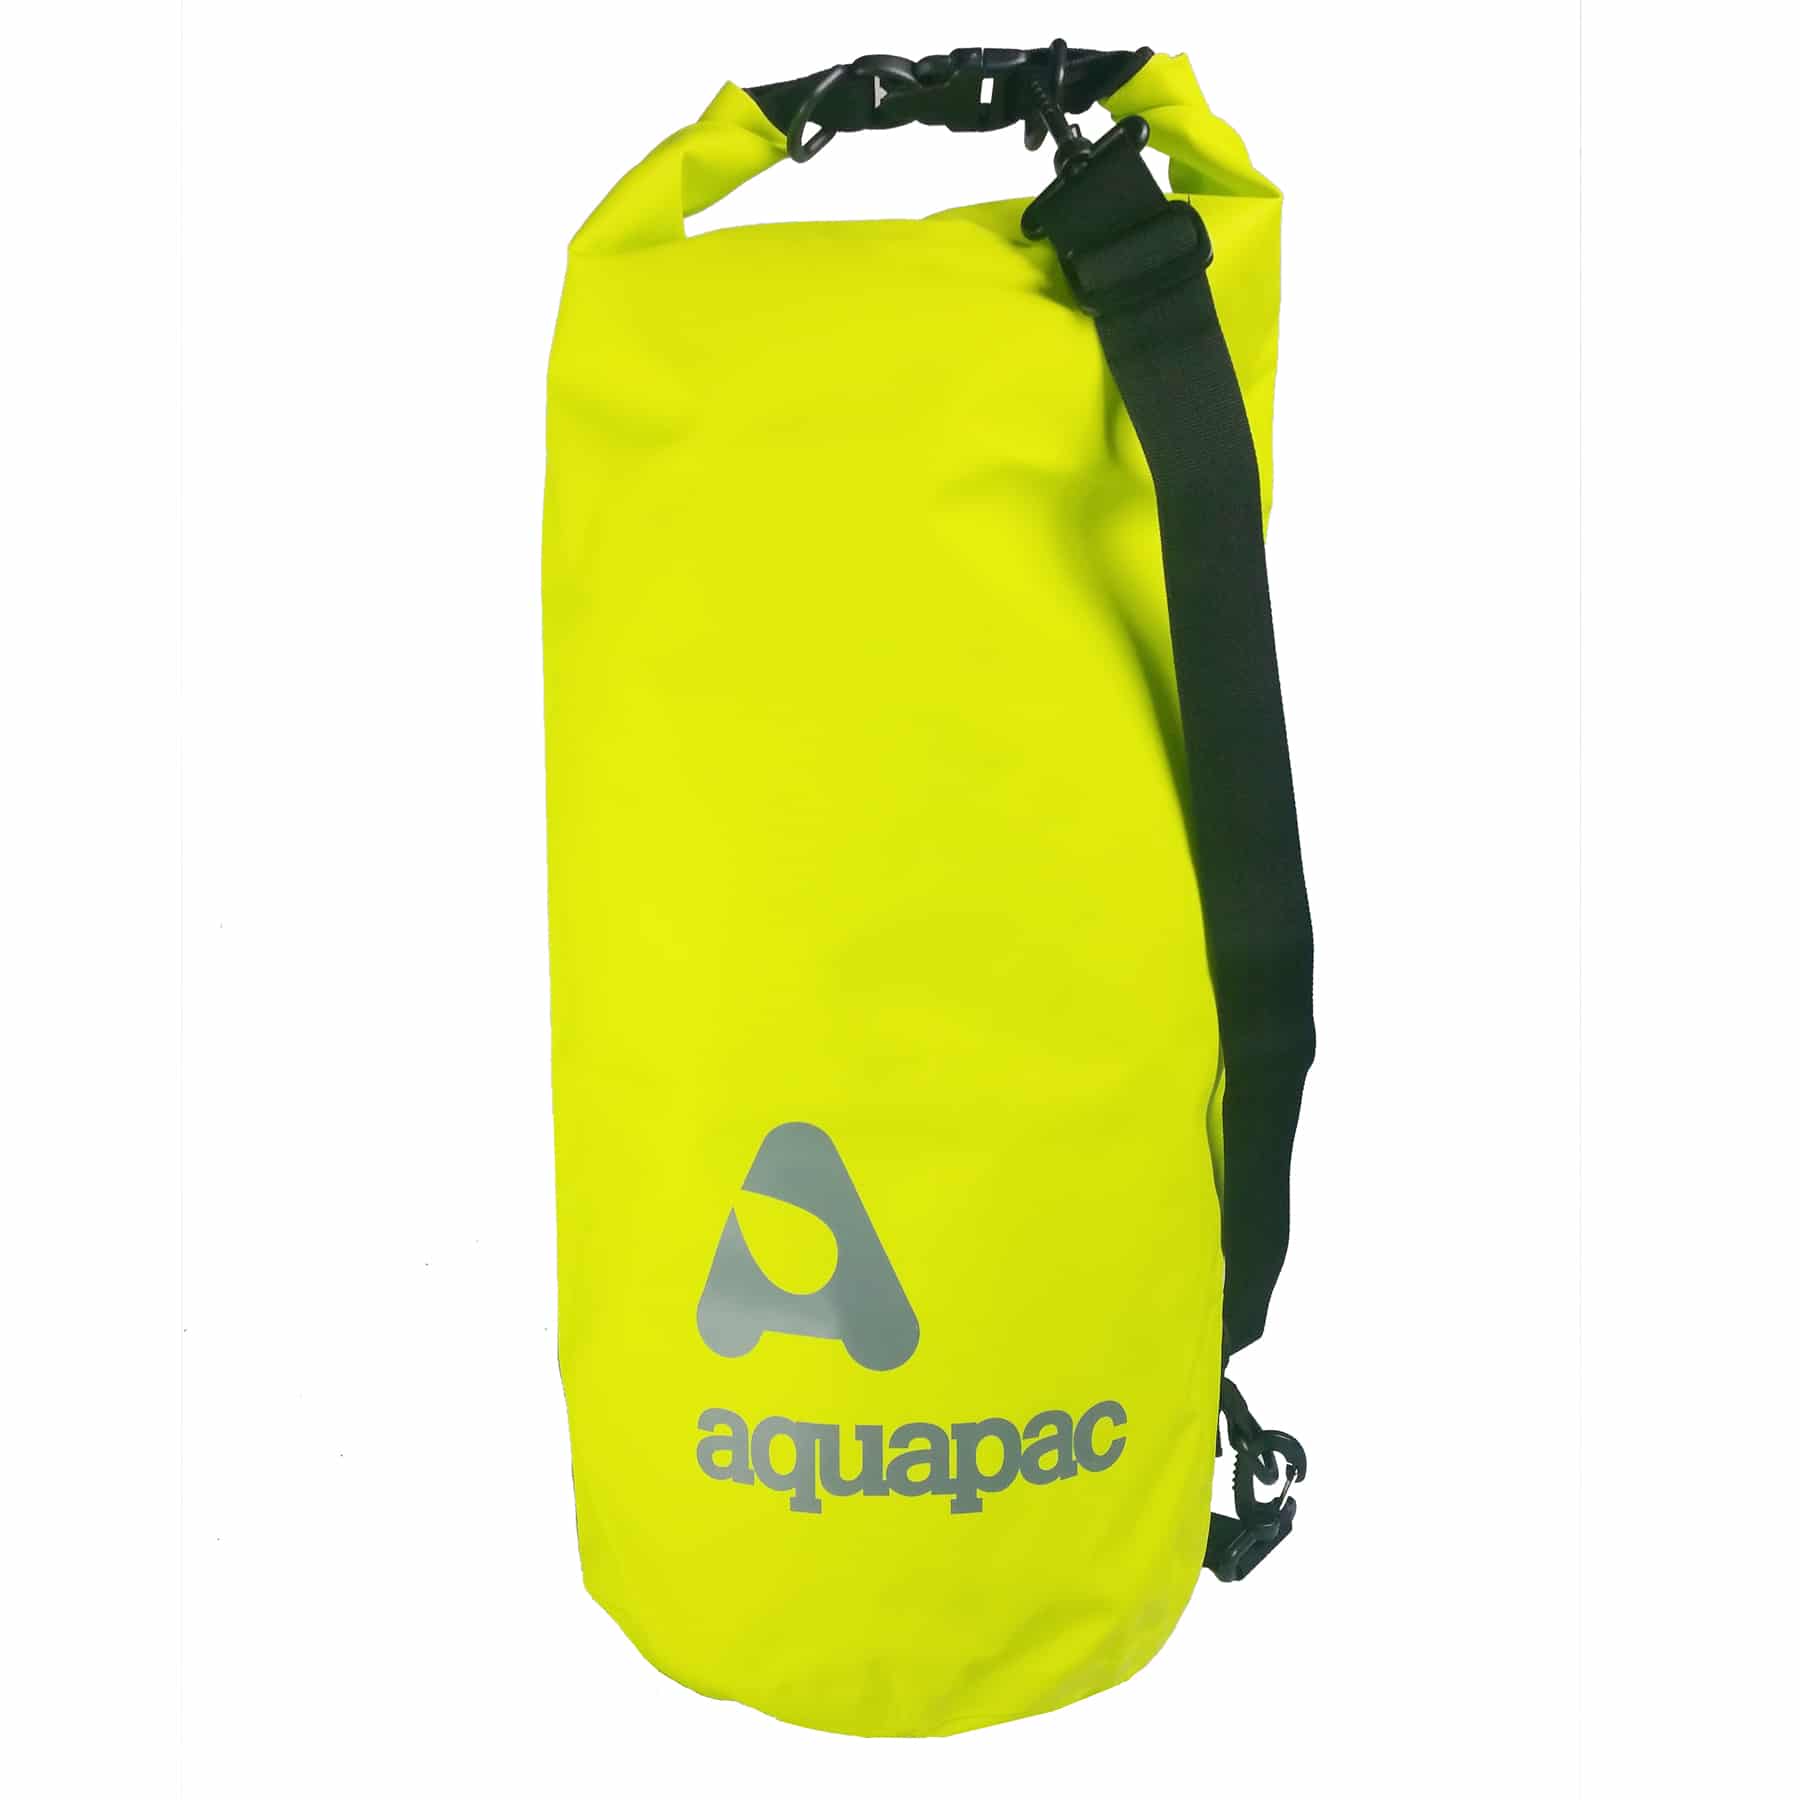 Aquapac 735 Trailproof Drybag - 25 Ltr - Green